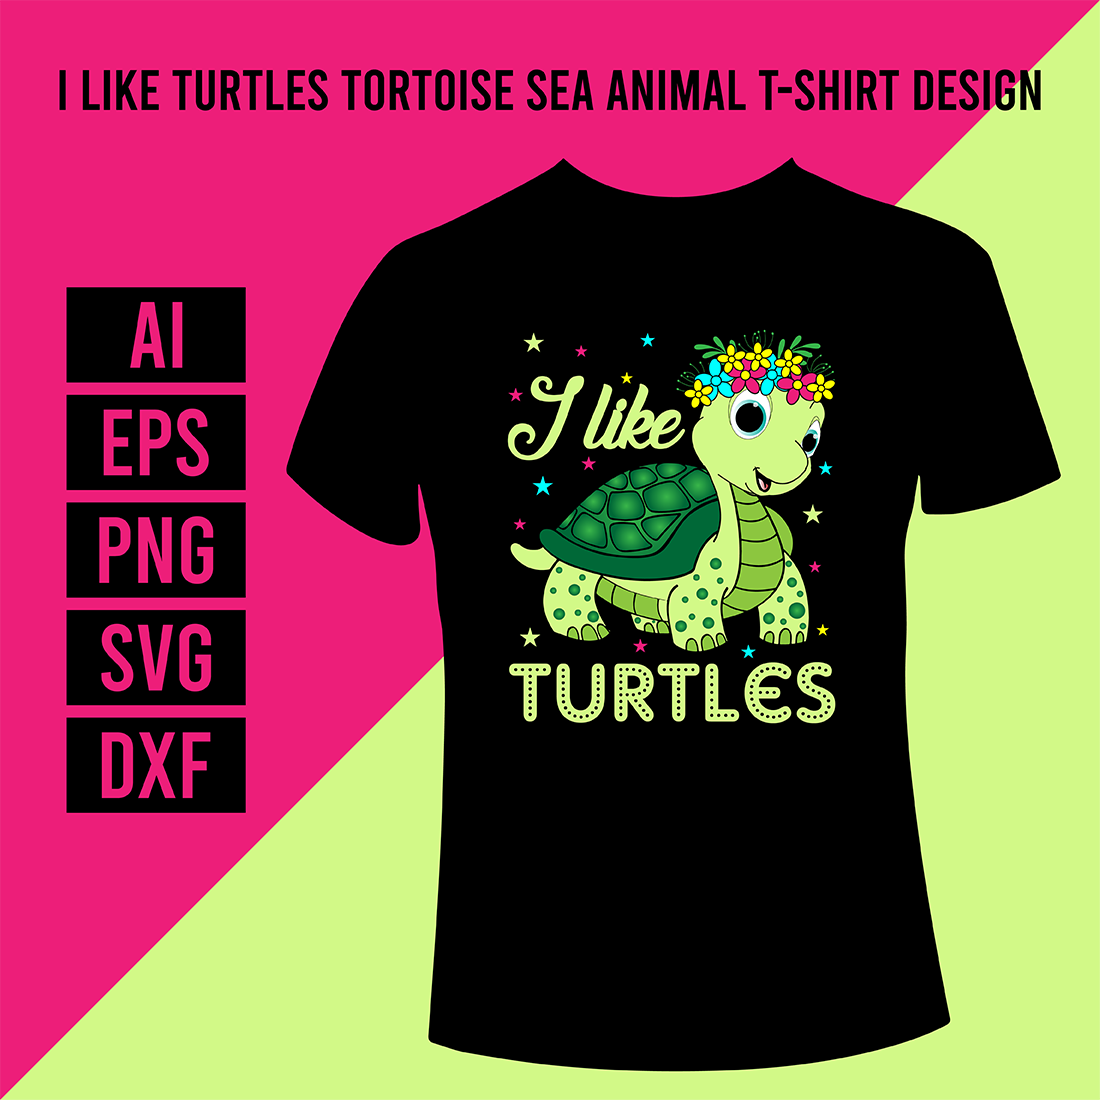 I like Turtles Tortoise Sea Animal T-Shirt Design cover image.